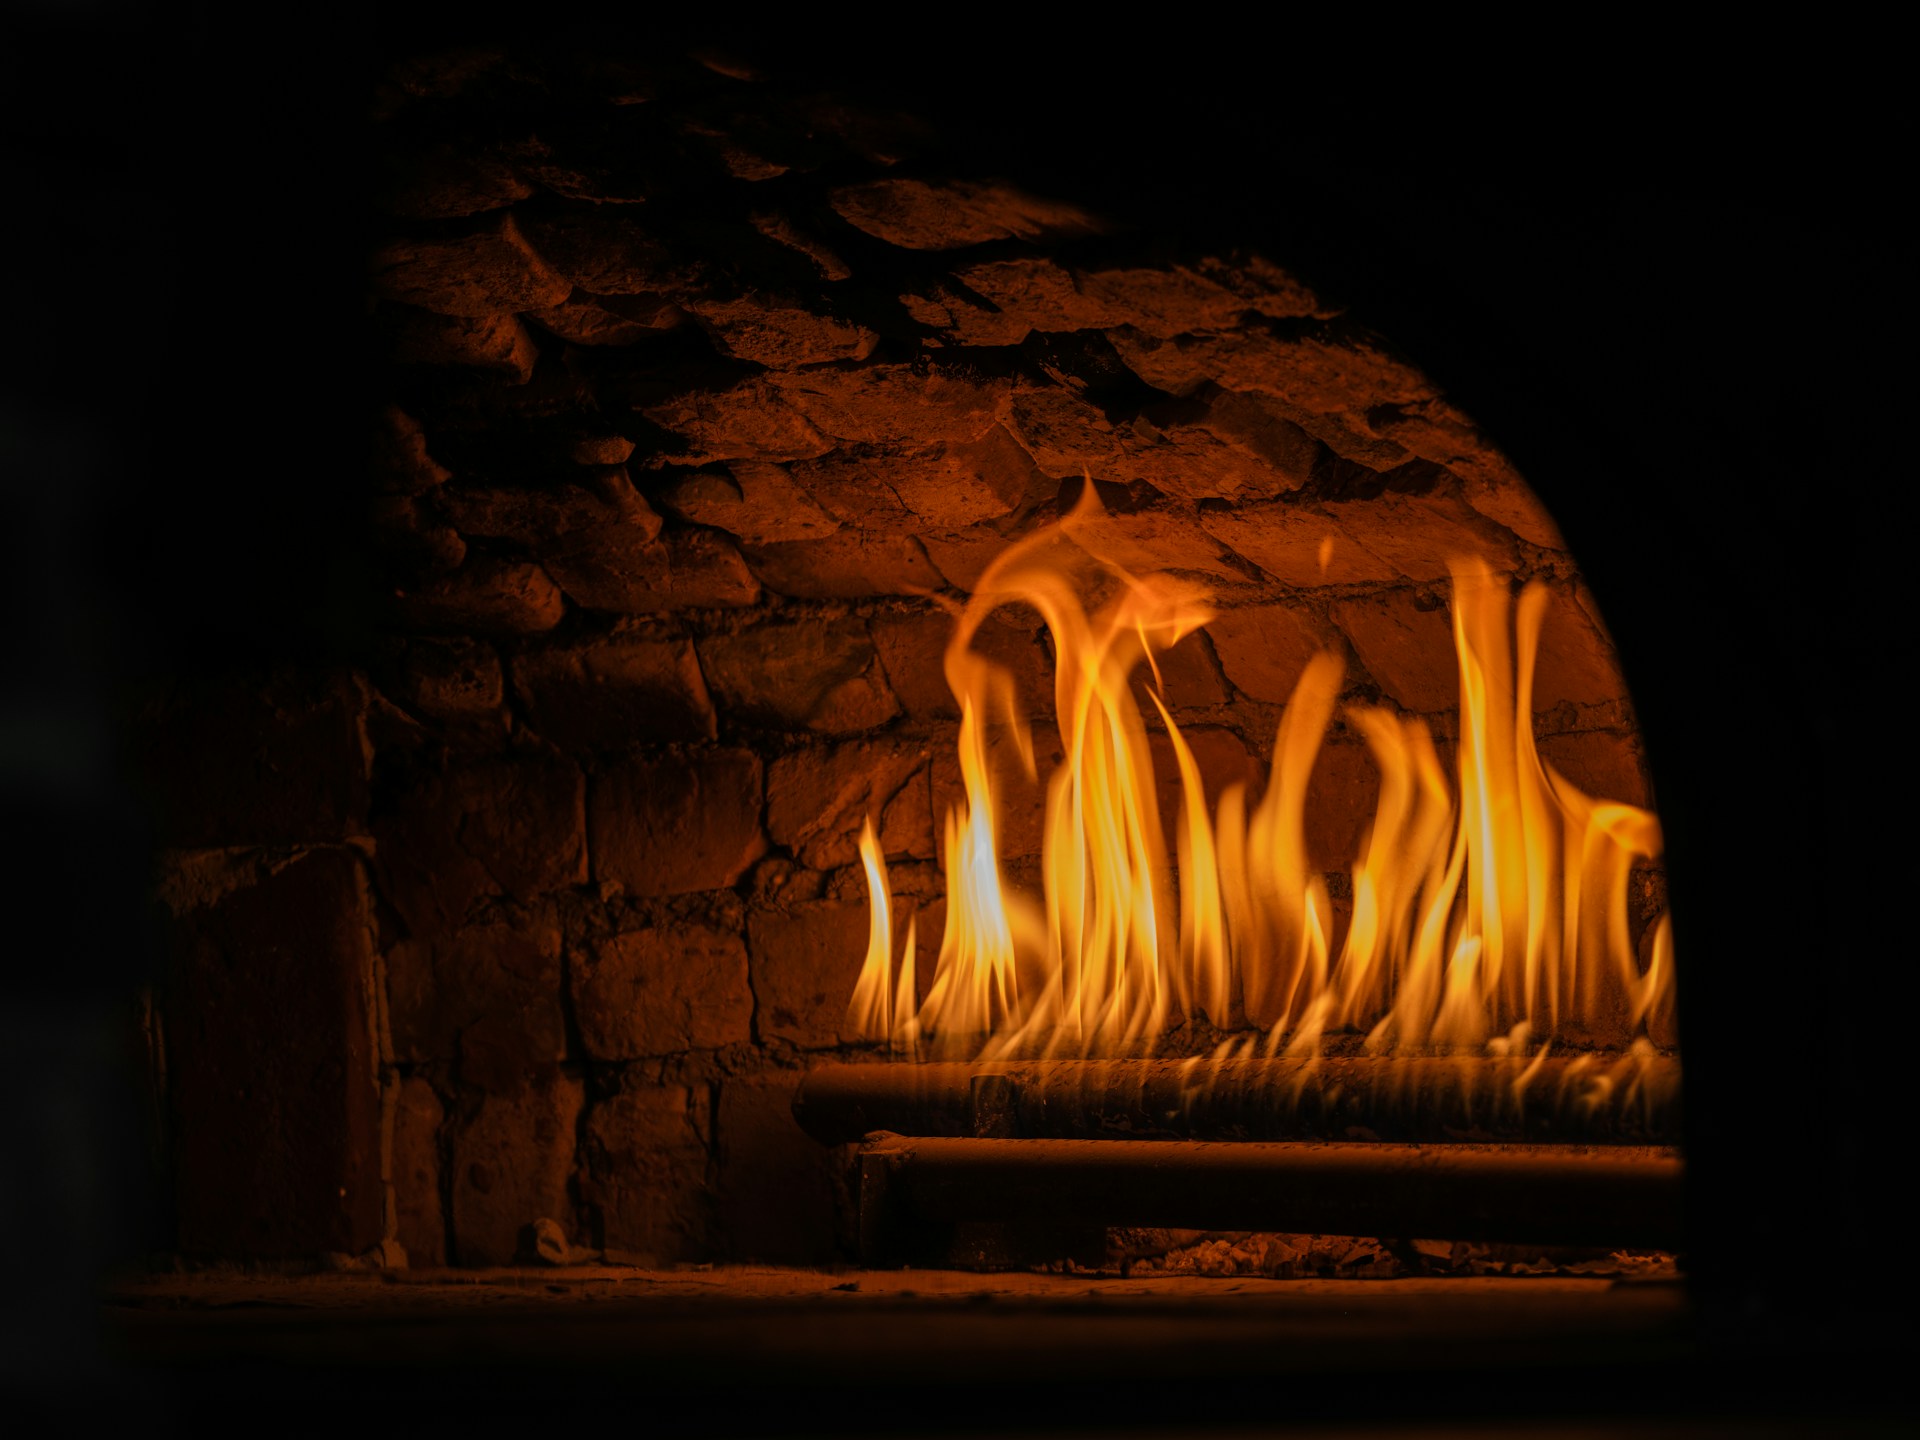 a fire in a brick fireplace